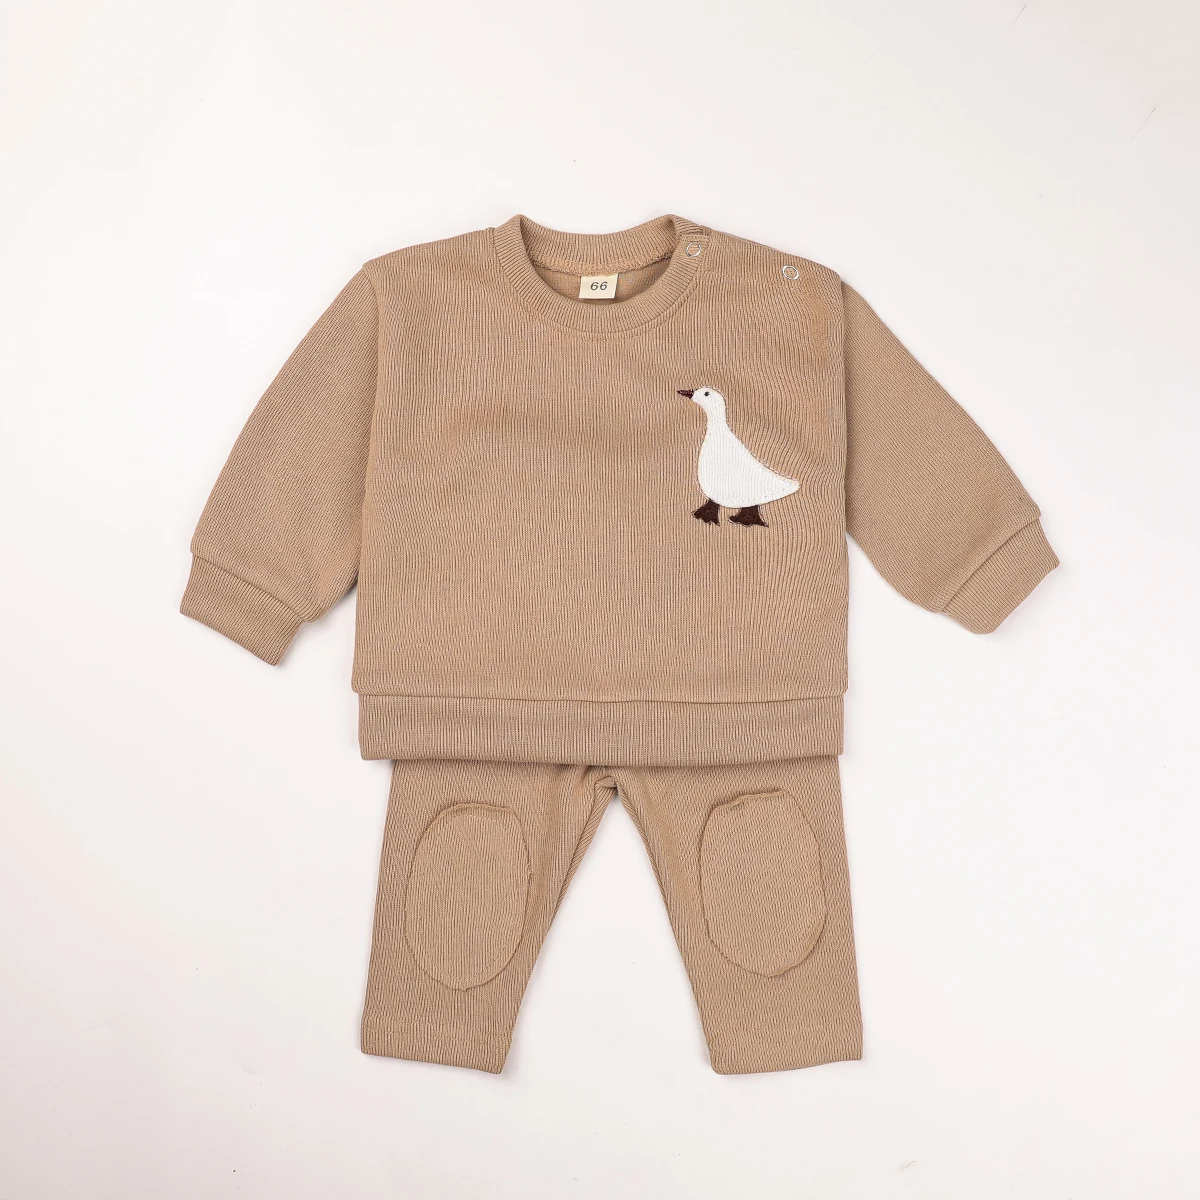 Baby Boy Clothes Set 2pcs Organic Cotton Patch Goose Sweatshirts Tops+Pants Children Kids Outfits Toddler Baby Girl Clothes Sets Baby Clothing Set luxury